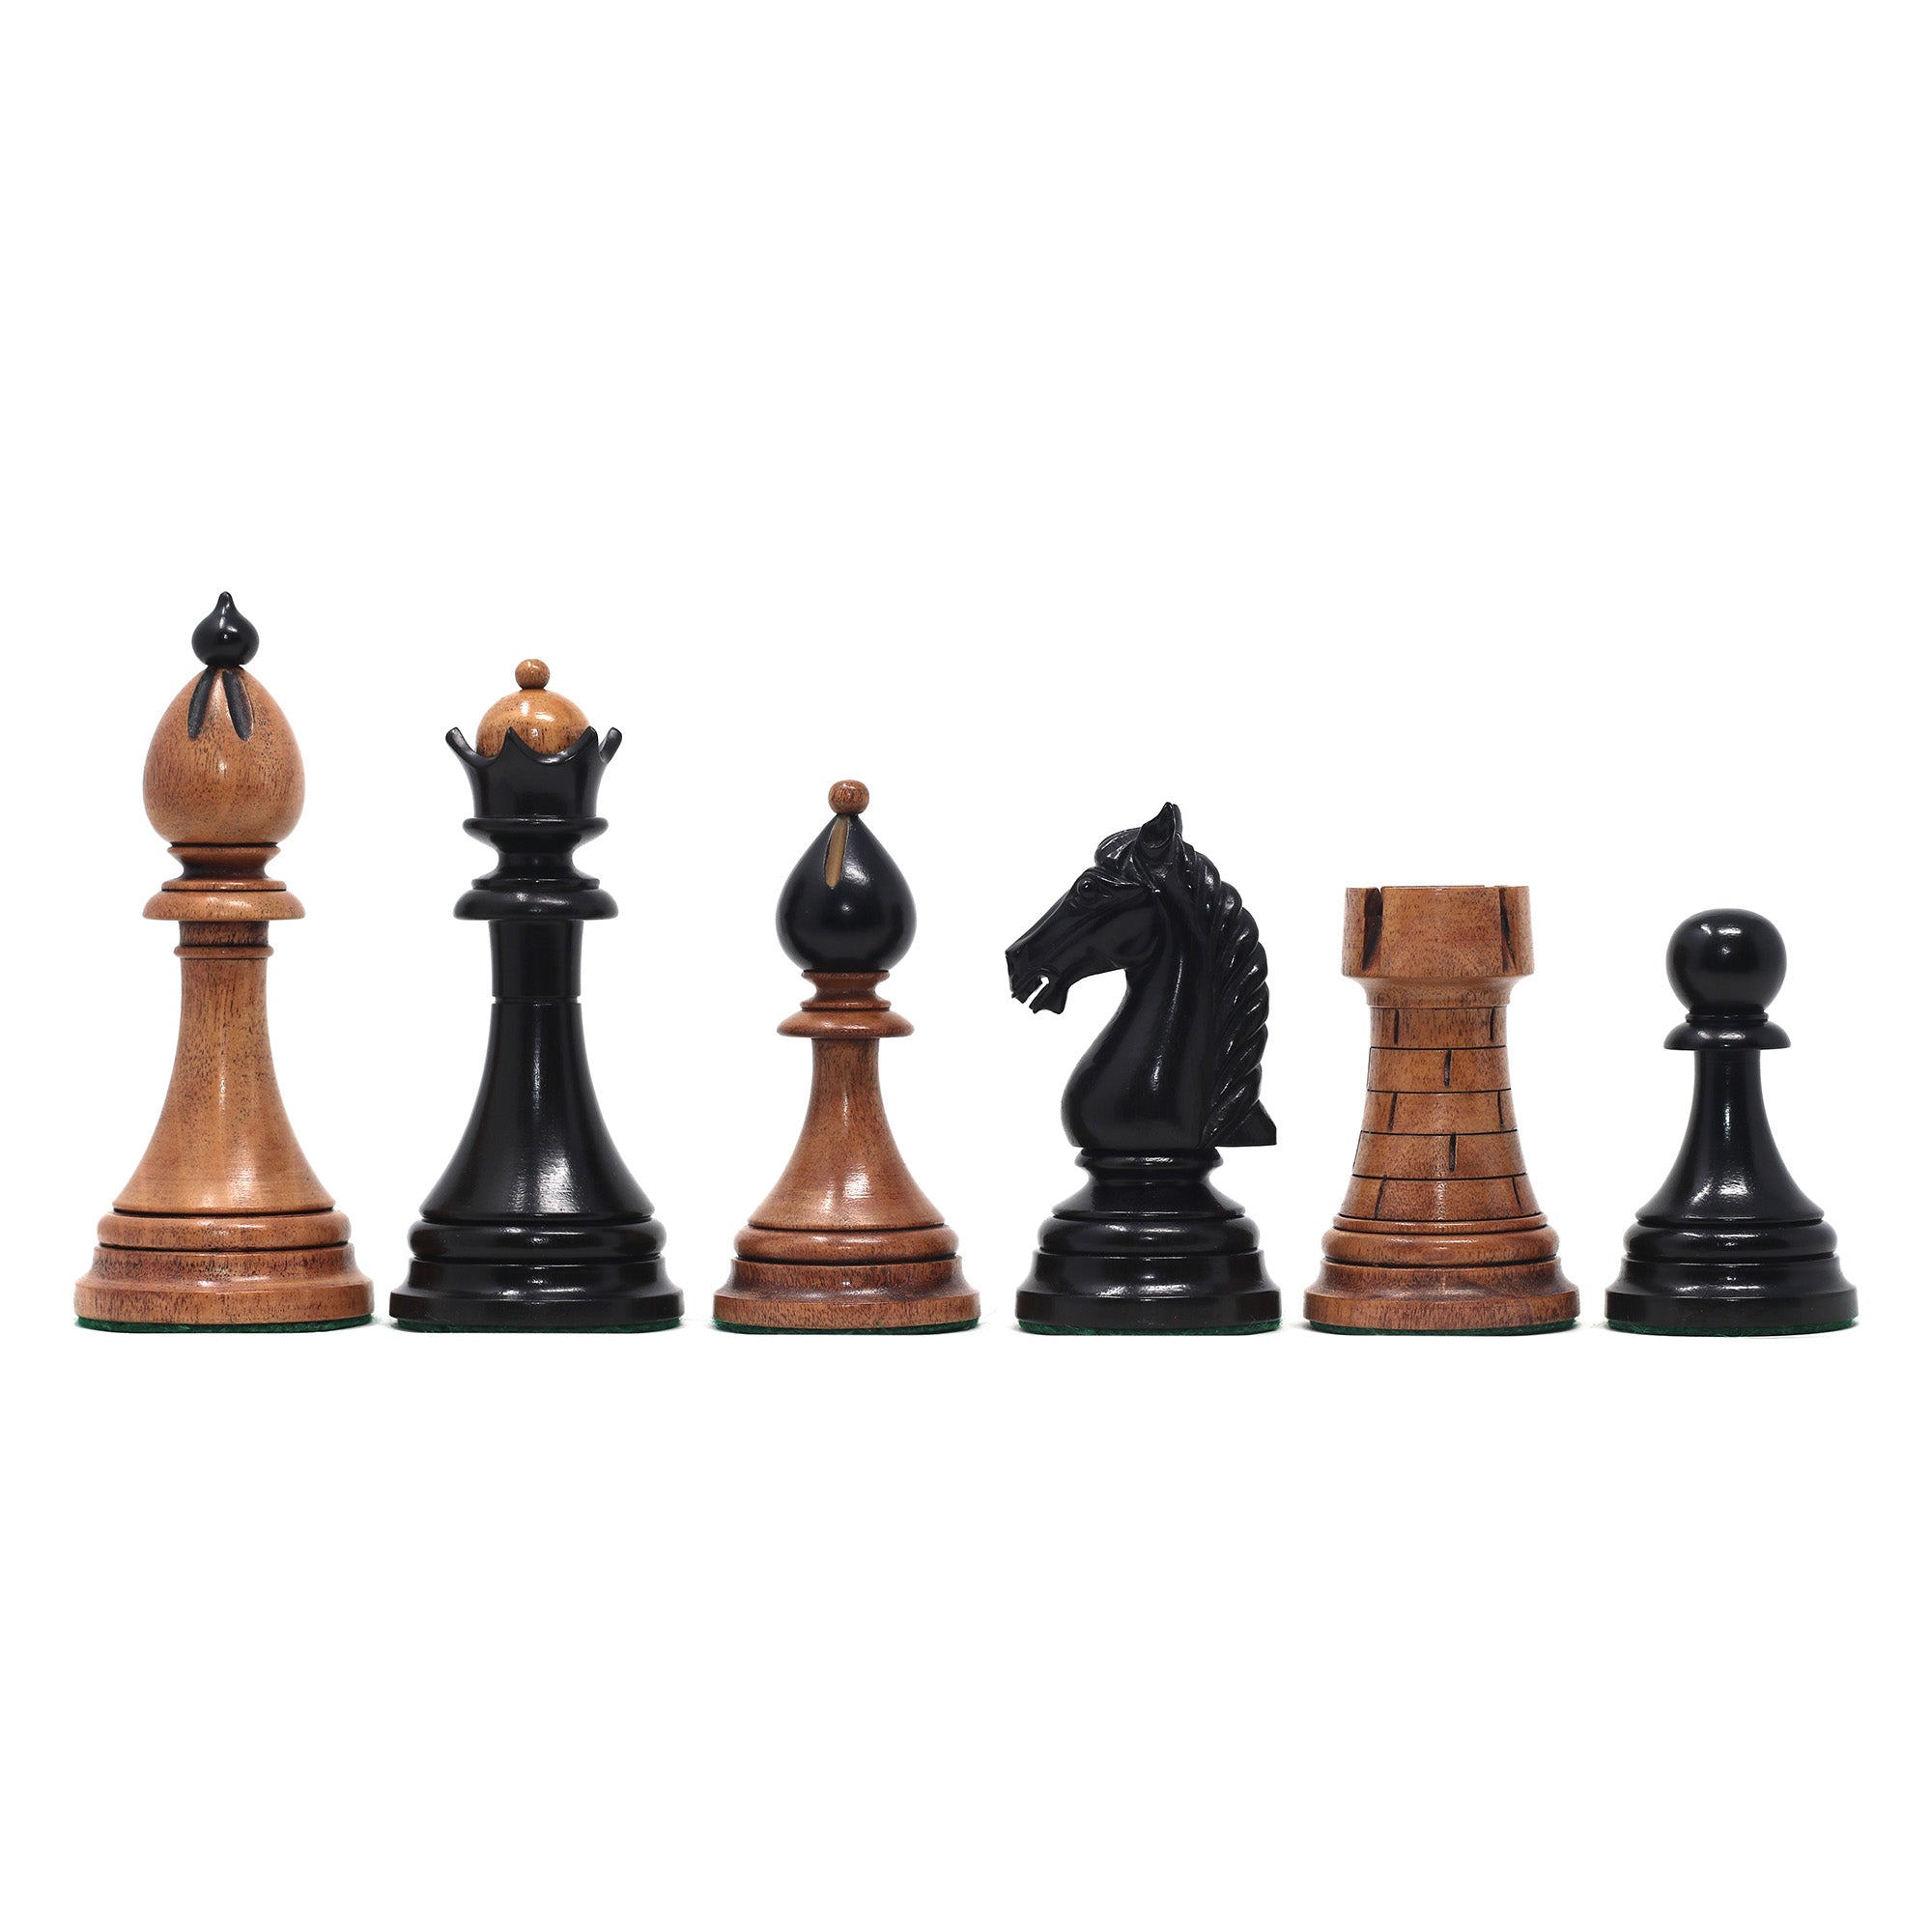 THE 1951-1954 "ČESKÁ KLUBOVKA" FIDE TOURNAMENT CZECH REPRODUCED CHESSMEN IN EBONY WOOD & DISTRESSED BOXWOOD - 4.0" KING